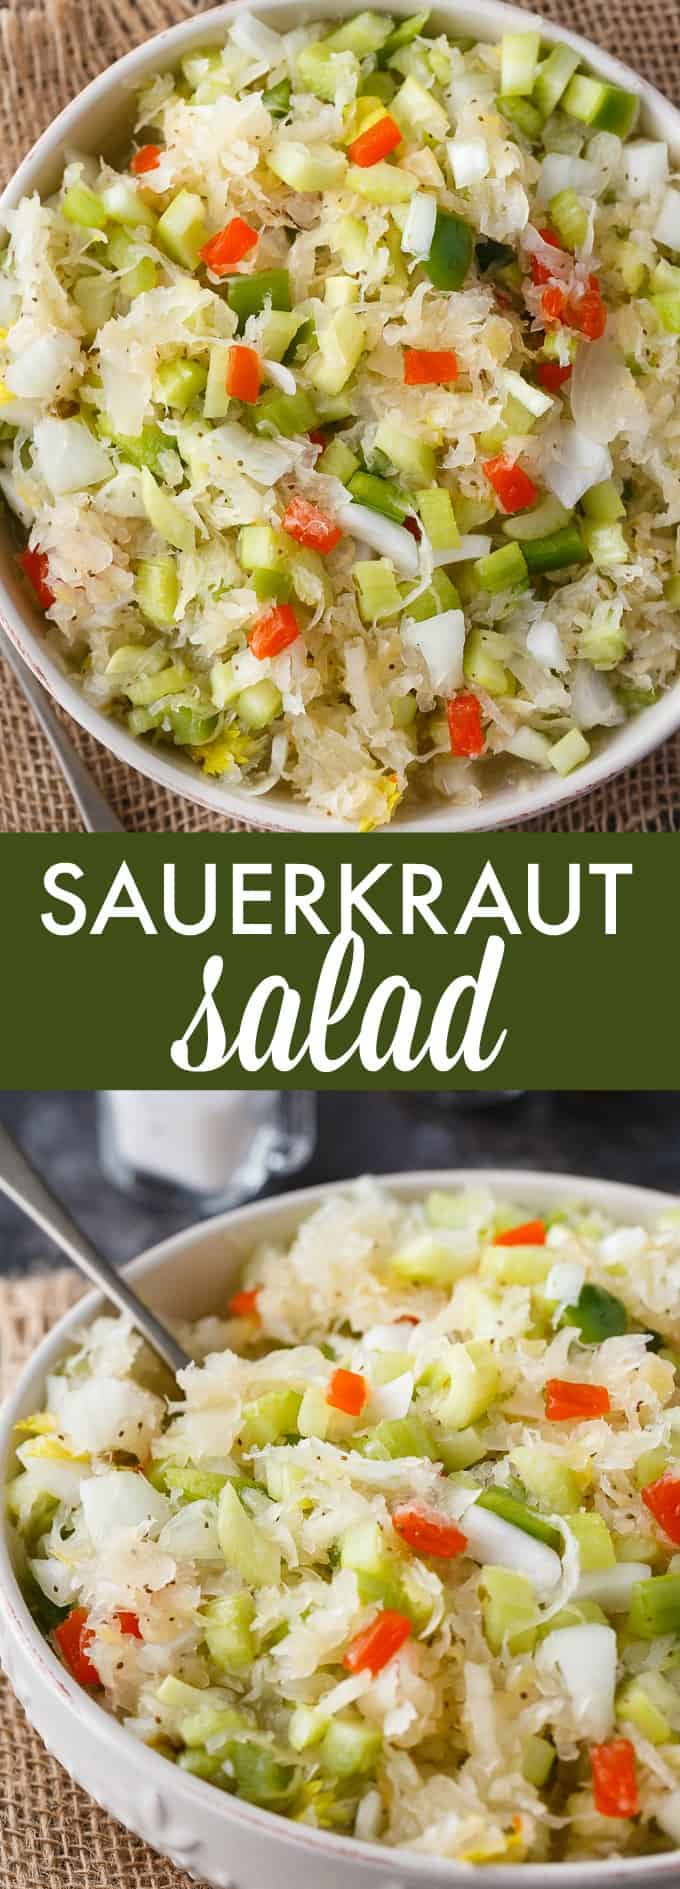 Sauerkraut Salad - Tangy and sweet! This delicious salad recipe has crisp veggies, sauerkraut tossed in a sweet dressing. Delish!